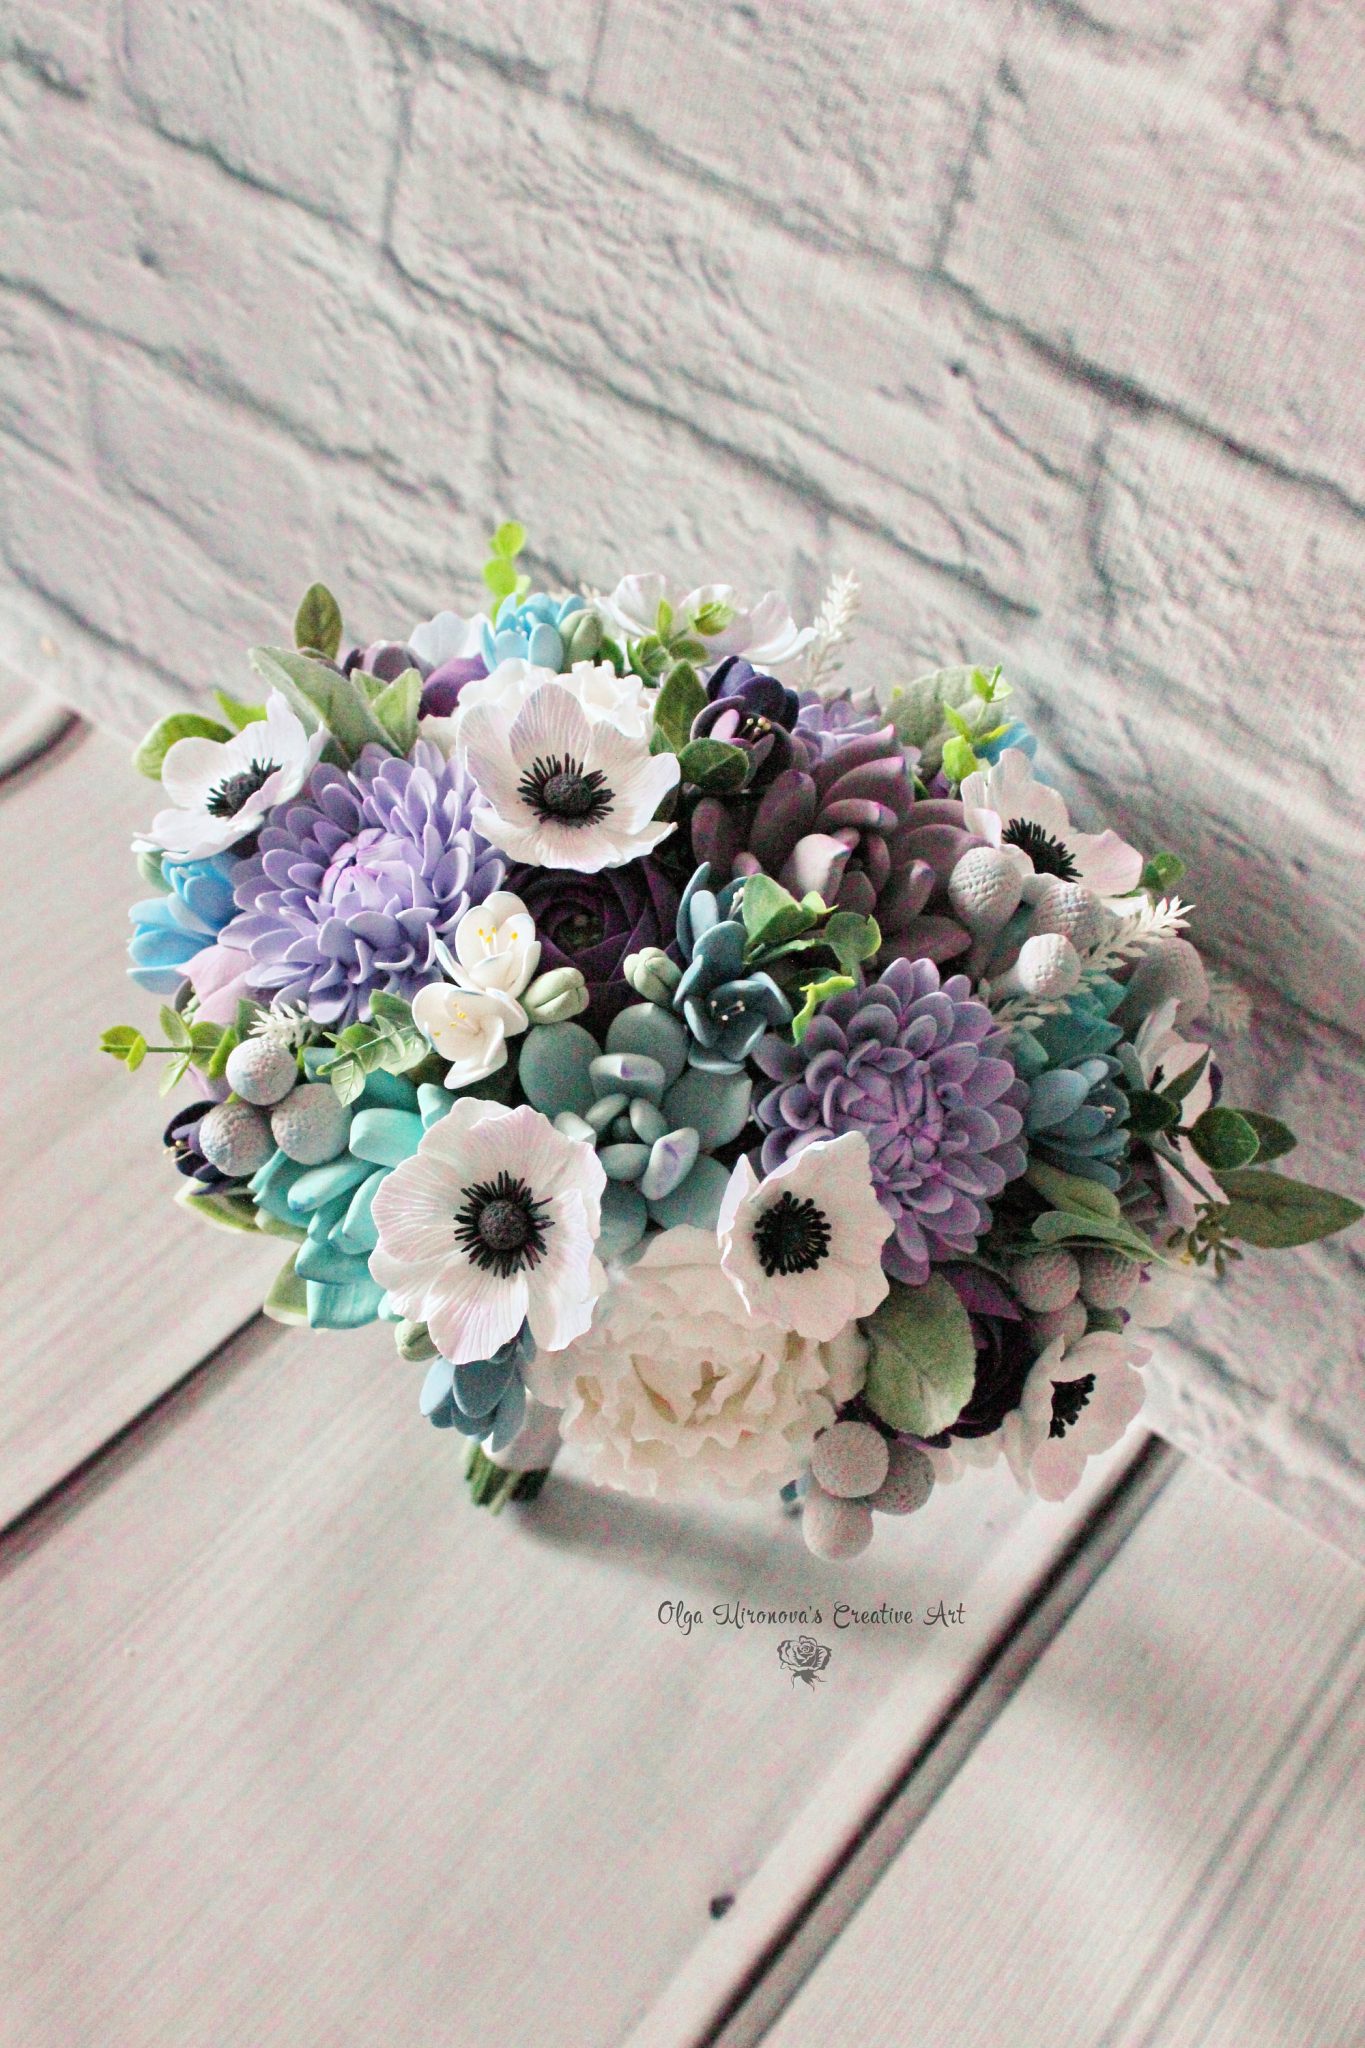 Георгины Purple Bouquet Anemone